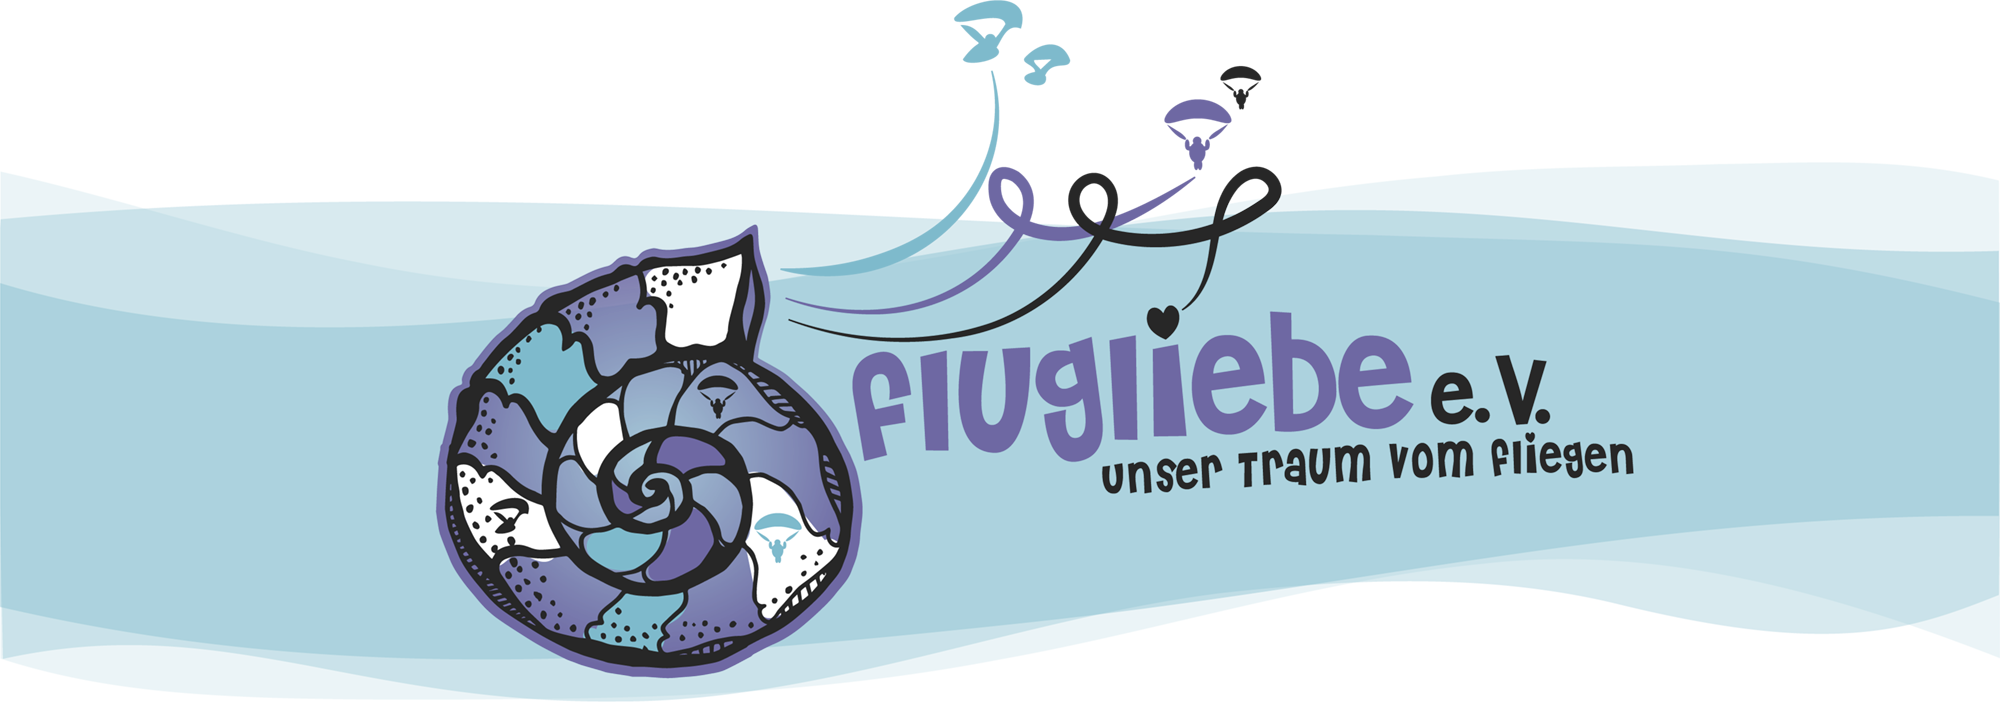 Flugliebe Logo 2000px 1